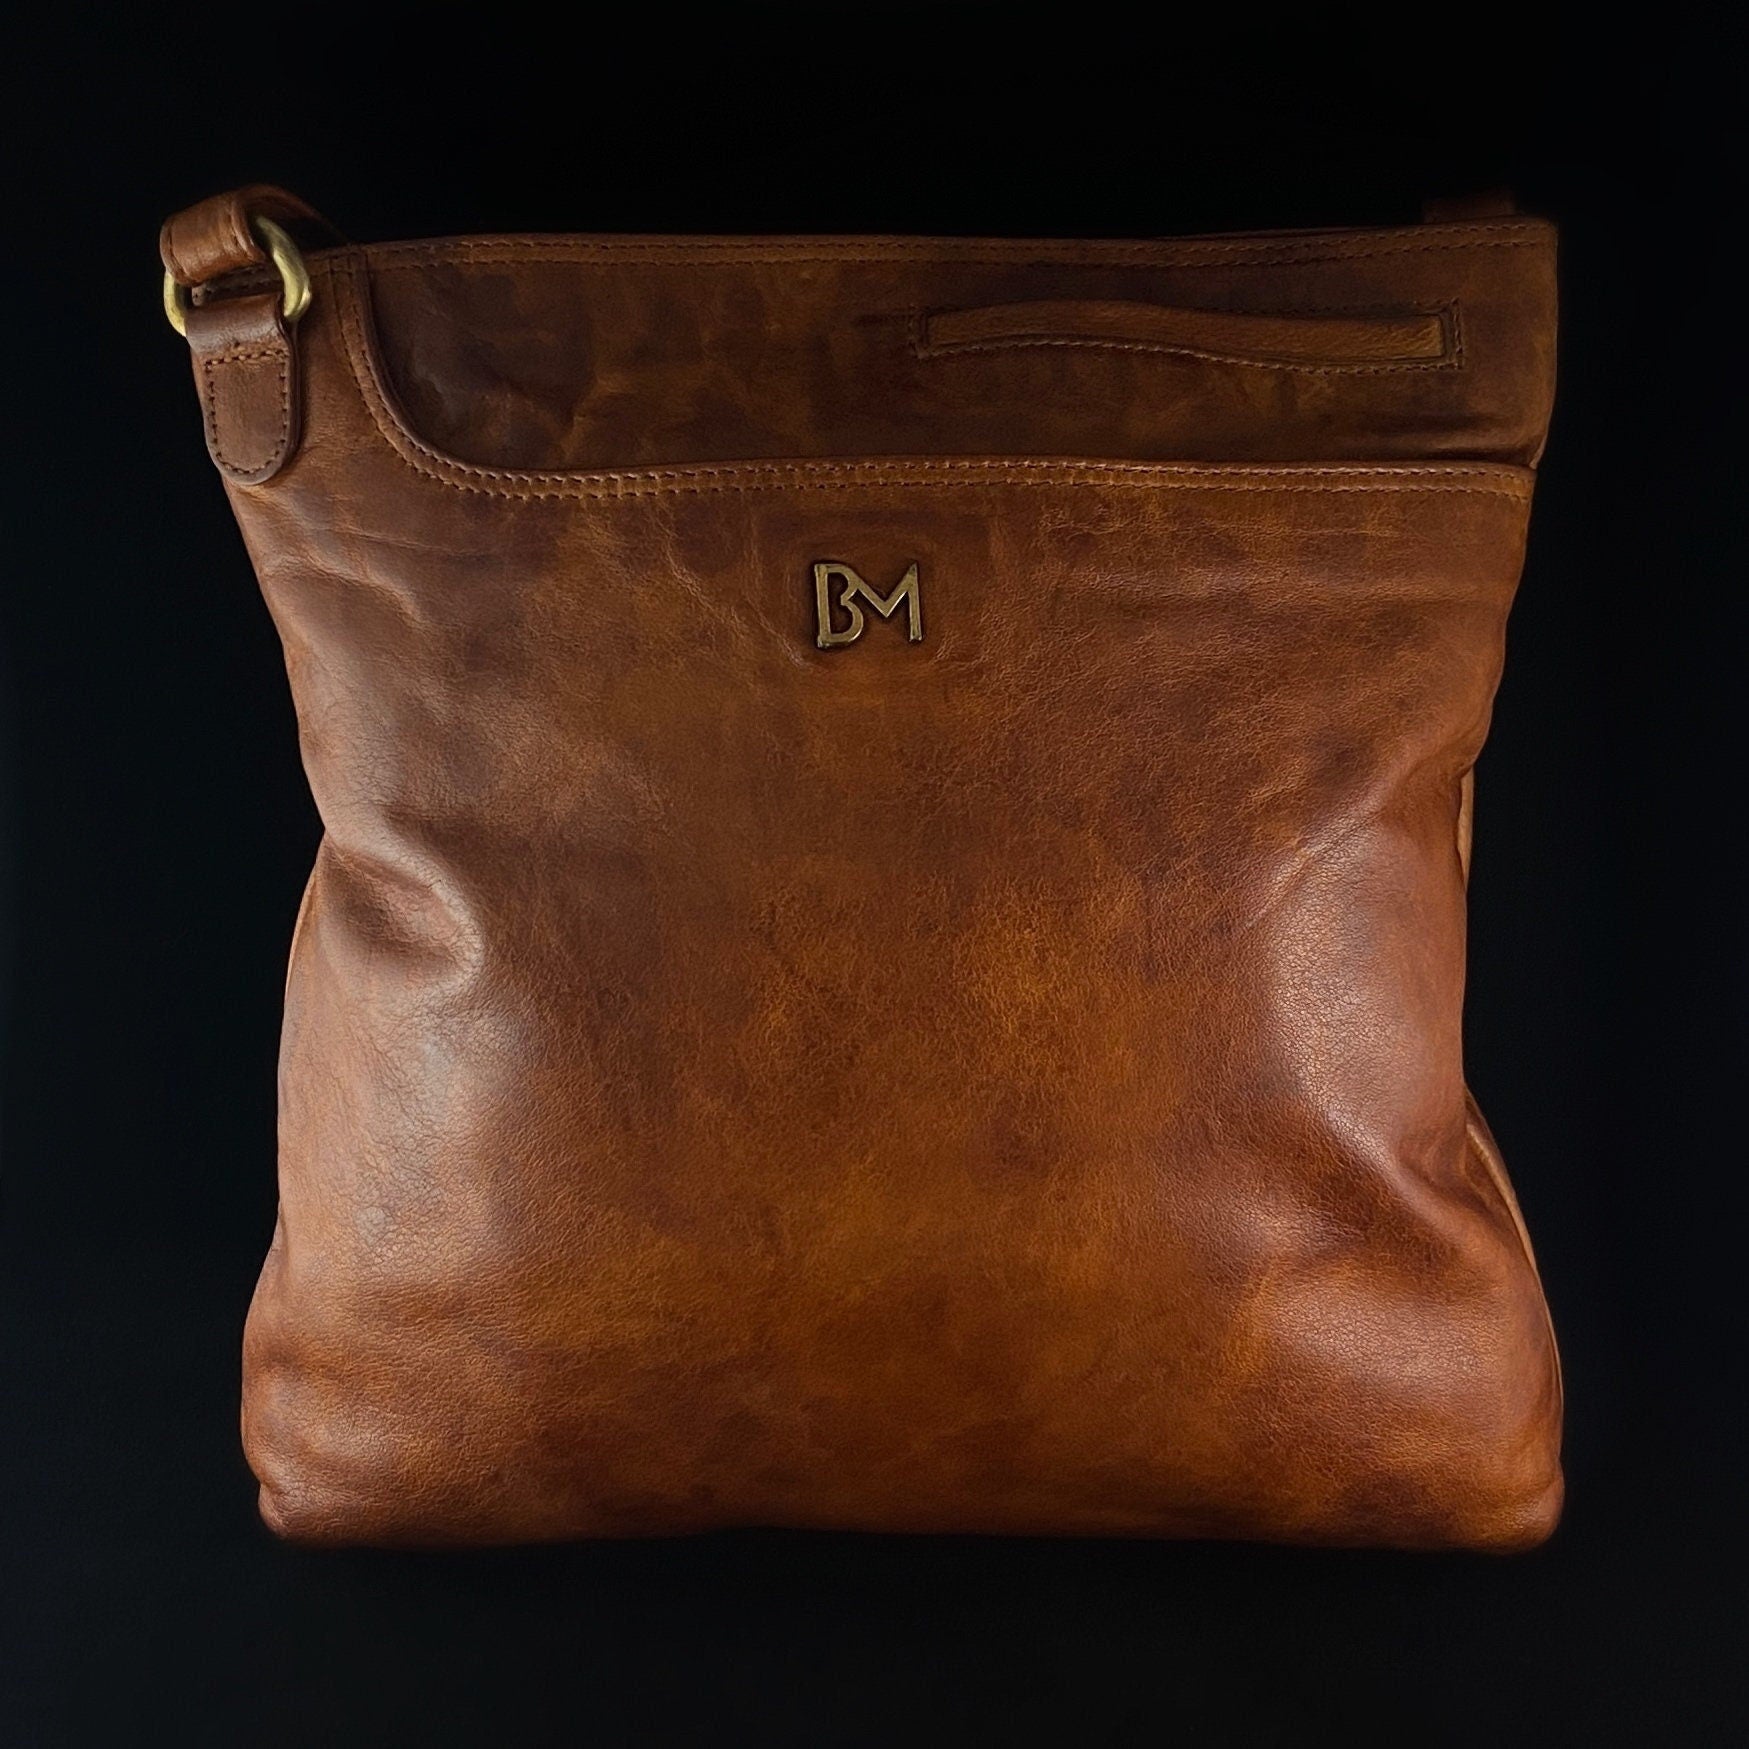 Genuine Italian Leather Handbag - Cognac Brown, Curve Pocket